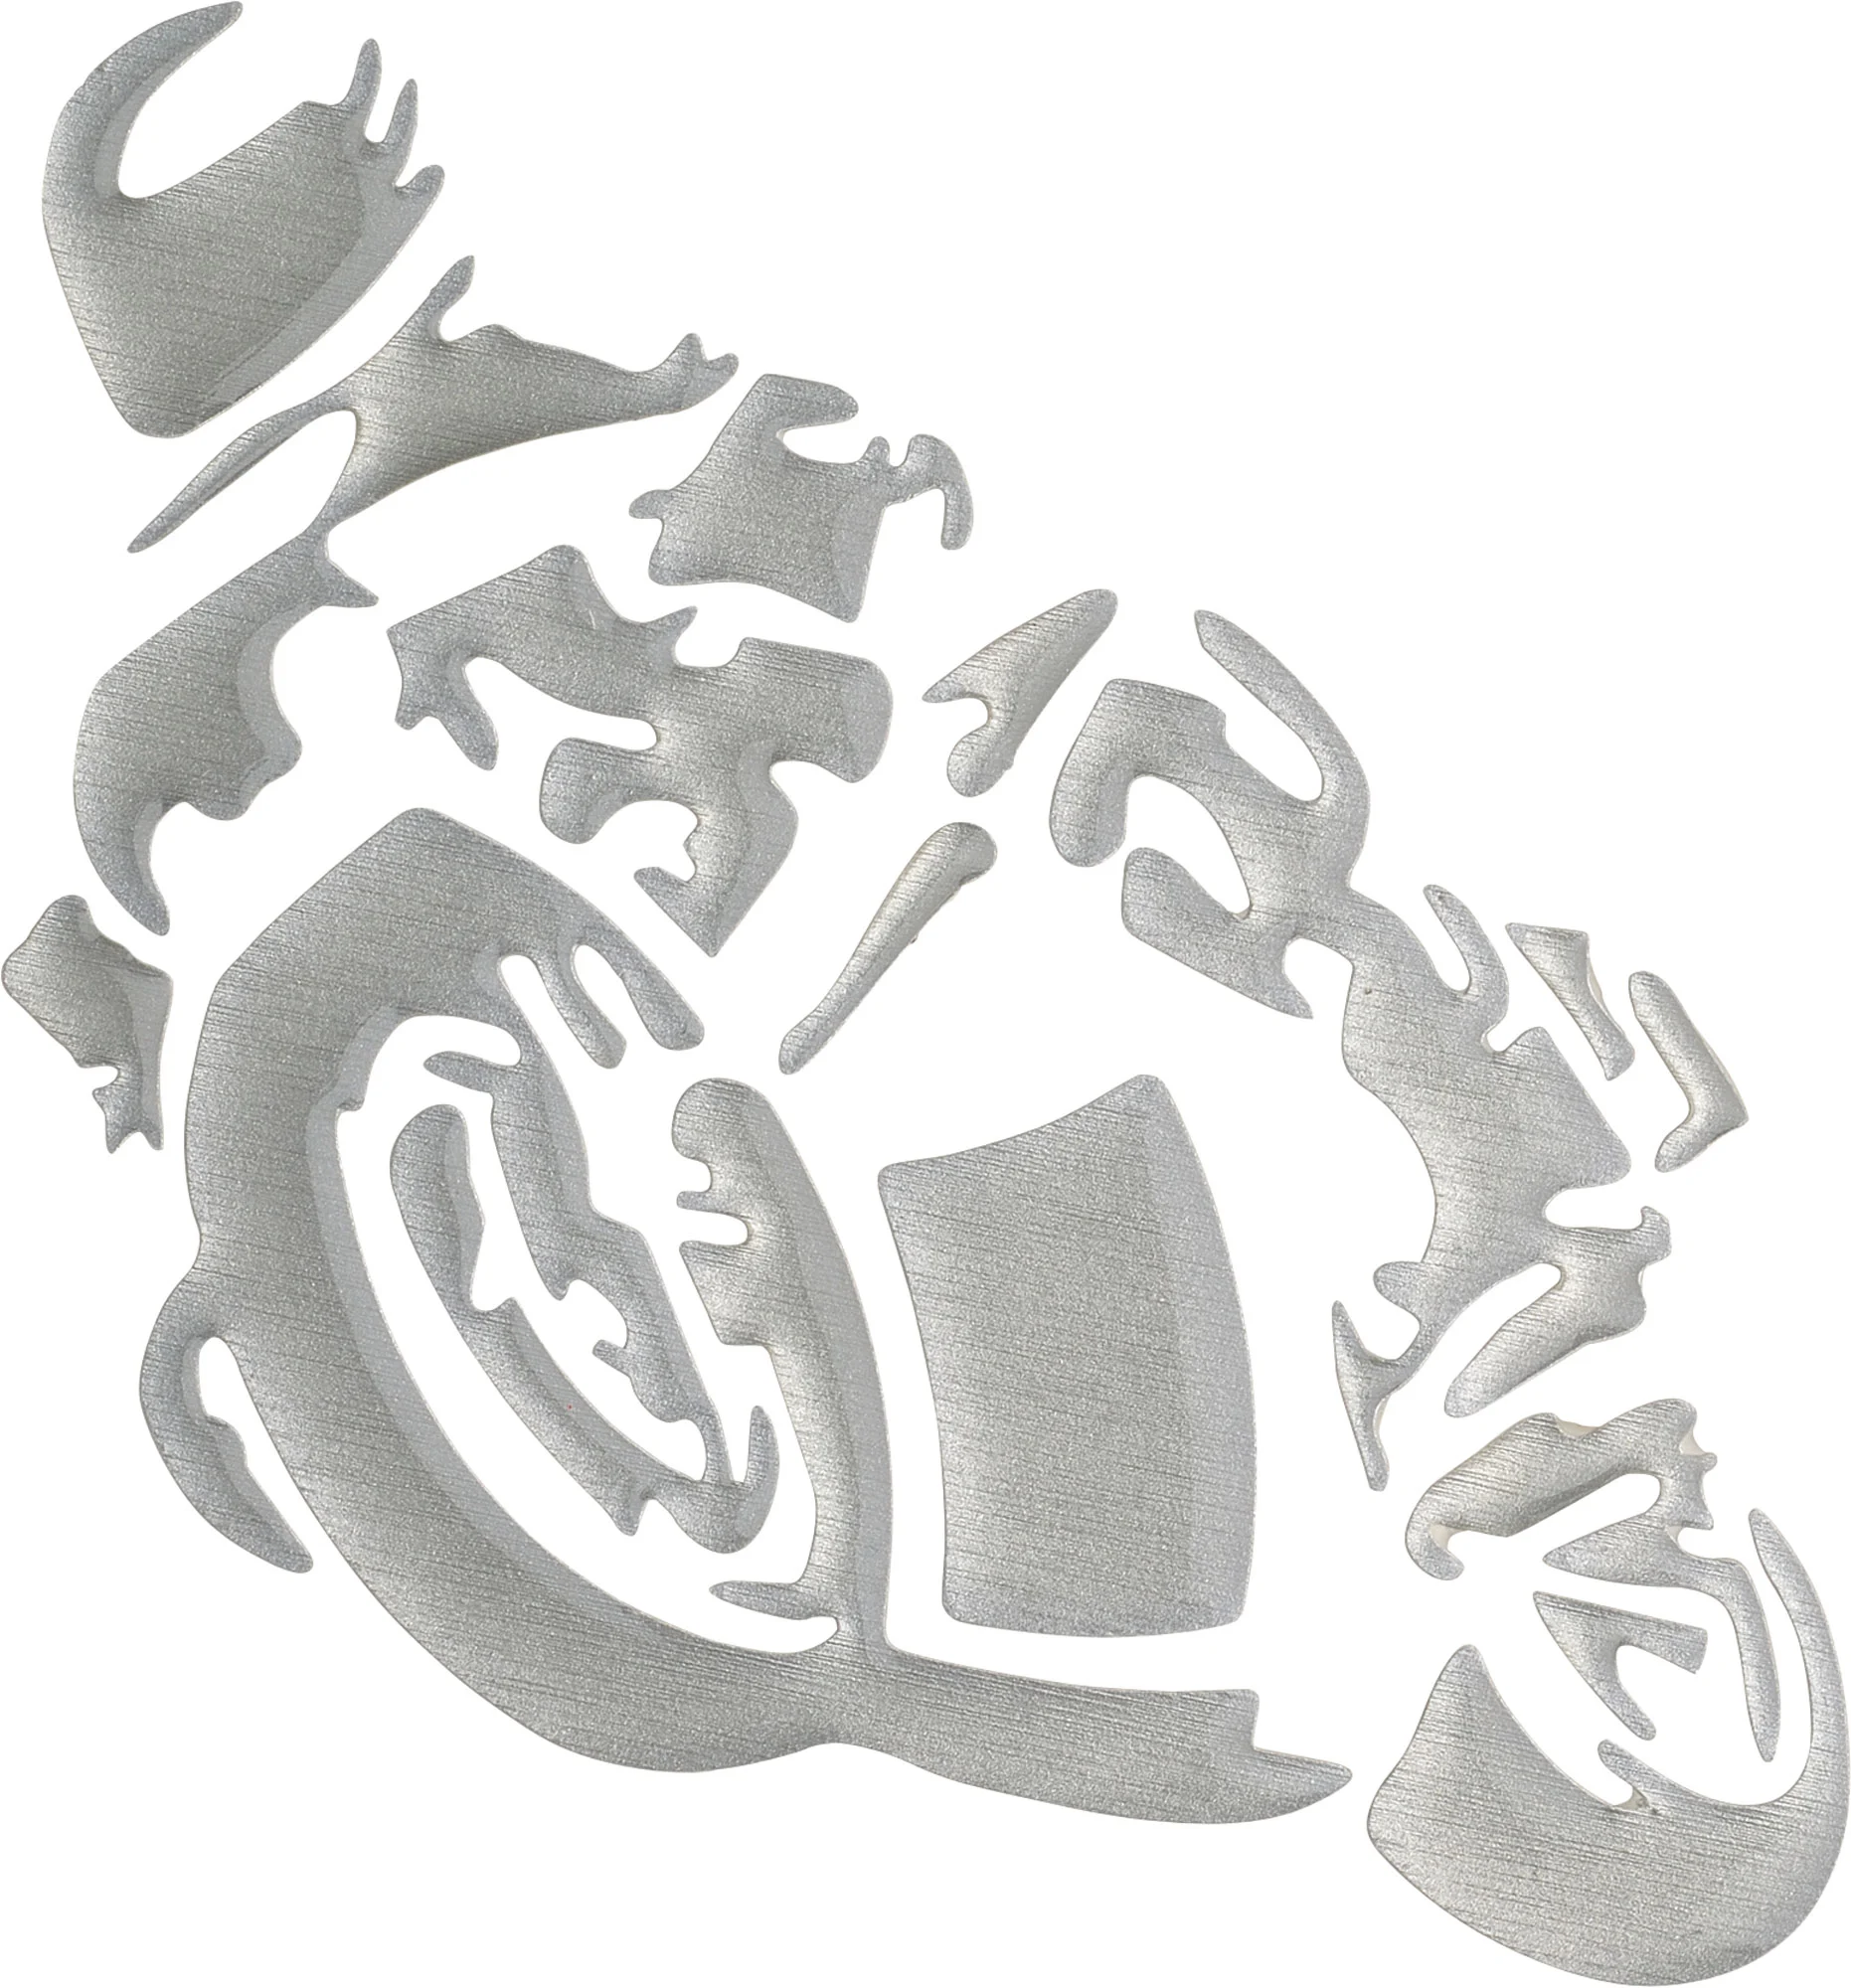 Louis 3D Sticker Motorcycle Size: 12x9cm, Black